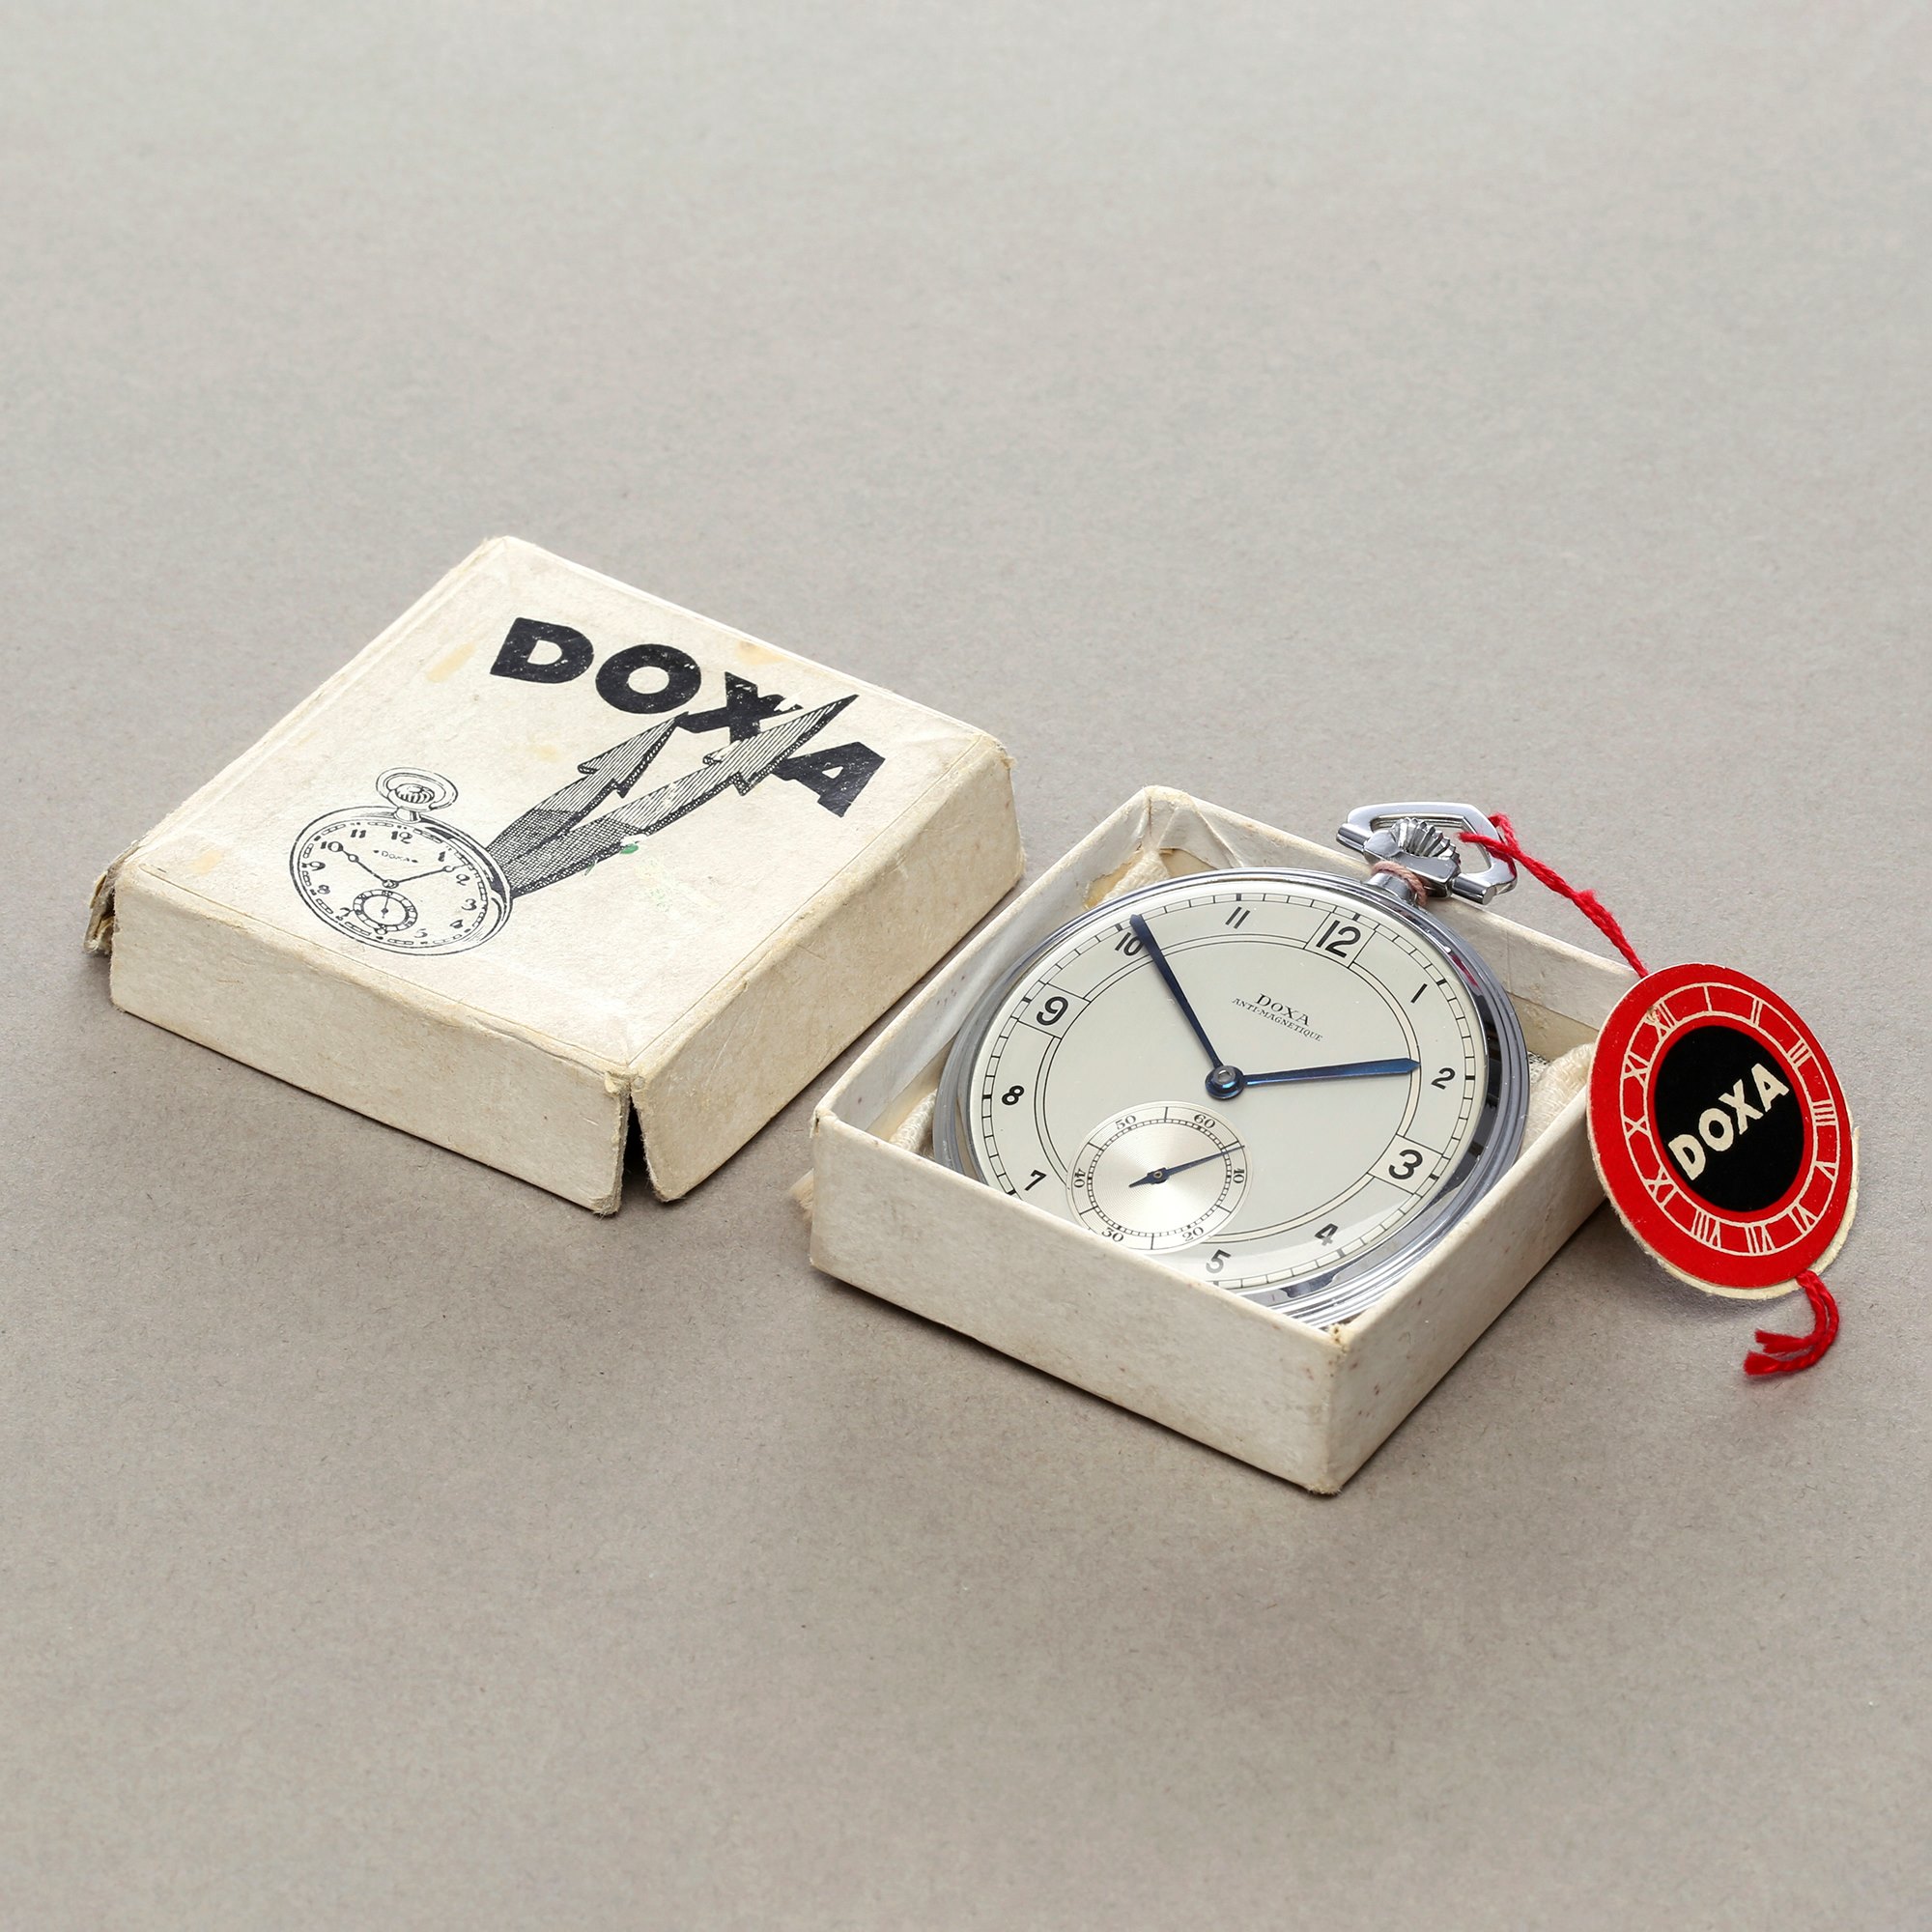 Doxa Pocket Watch NOS Stainless Steel